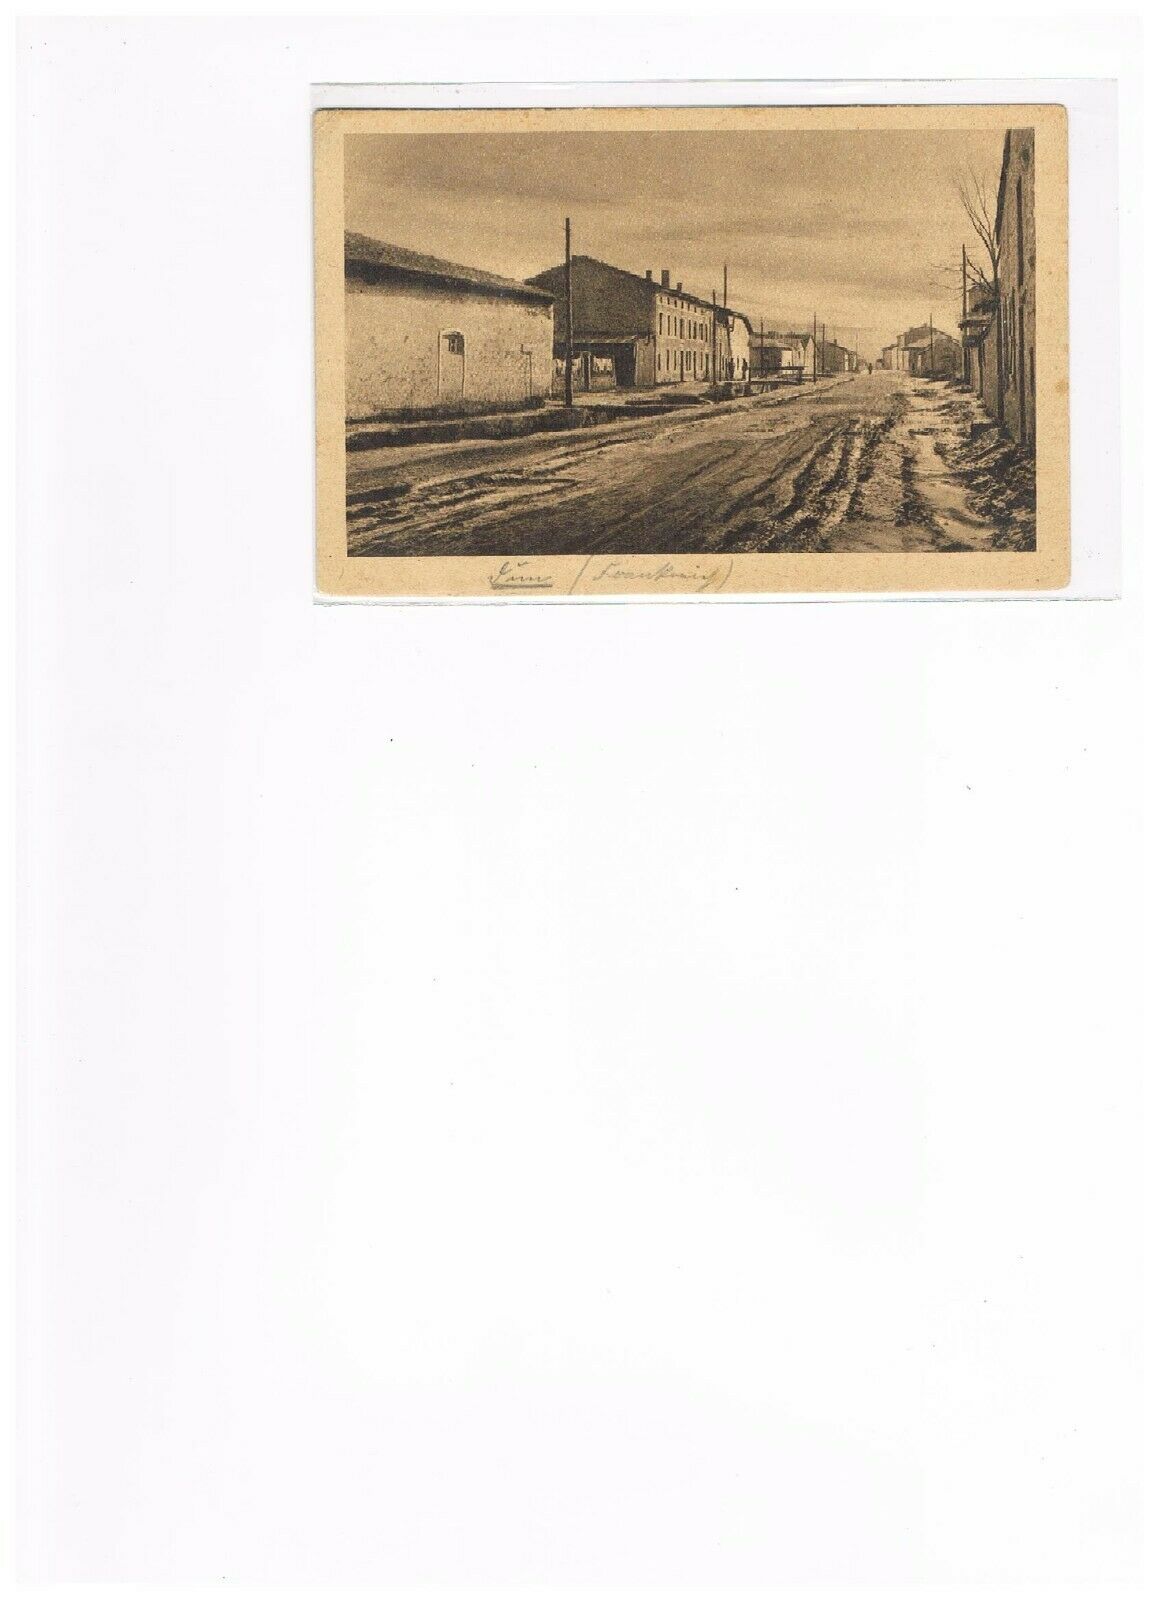 House Clearance - Dun-sur-Meuse-used as field post 1918 (Verdun-Stenay)